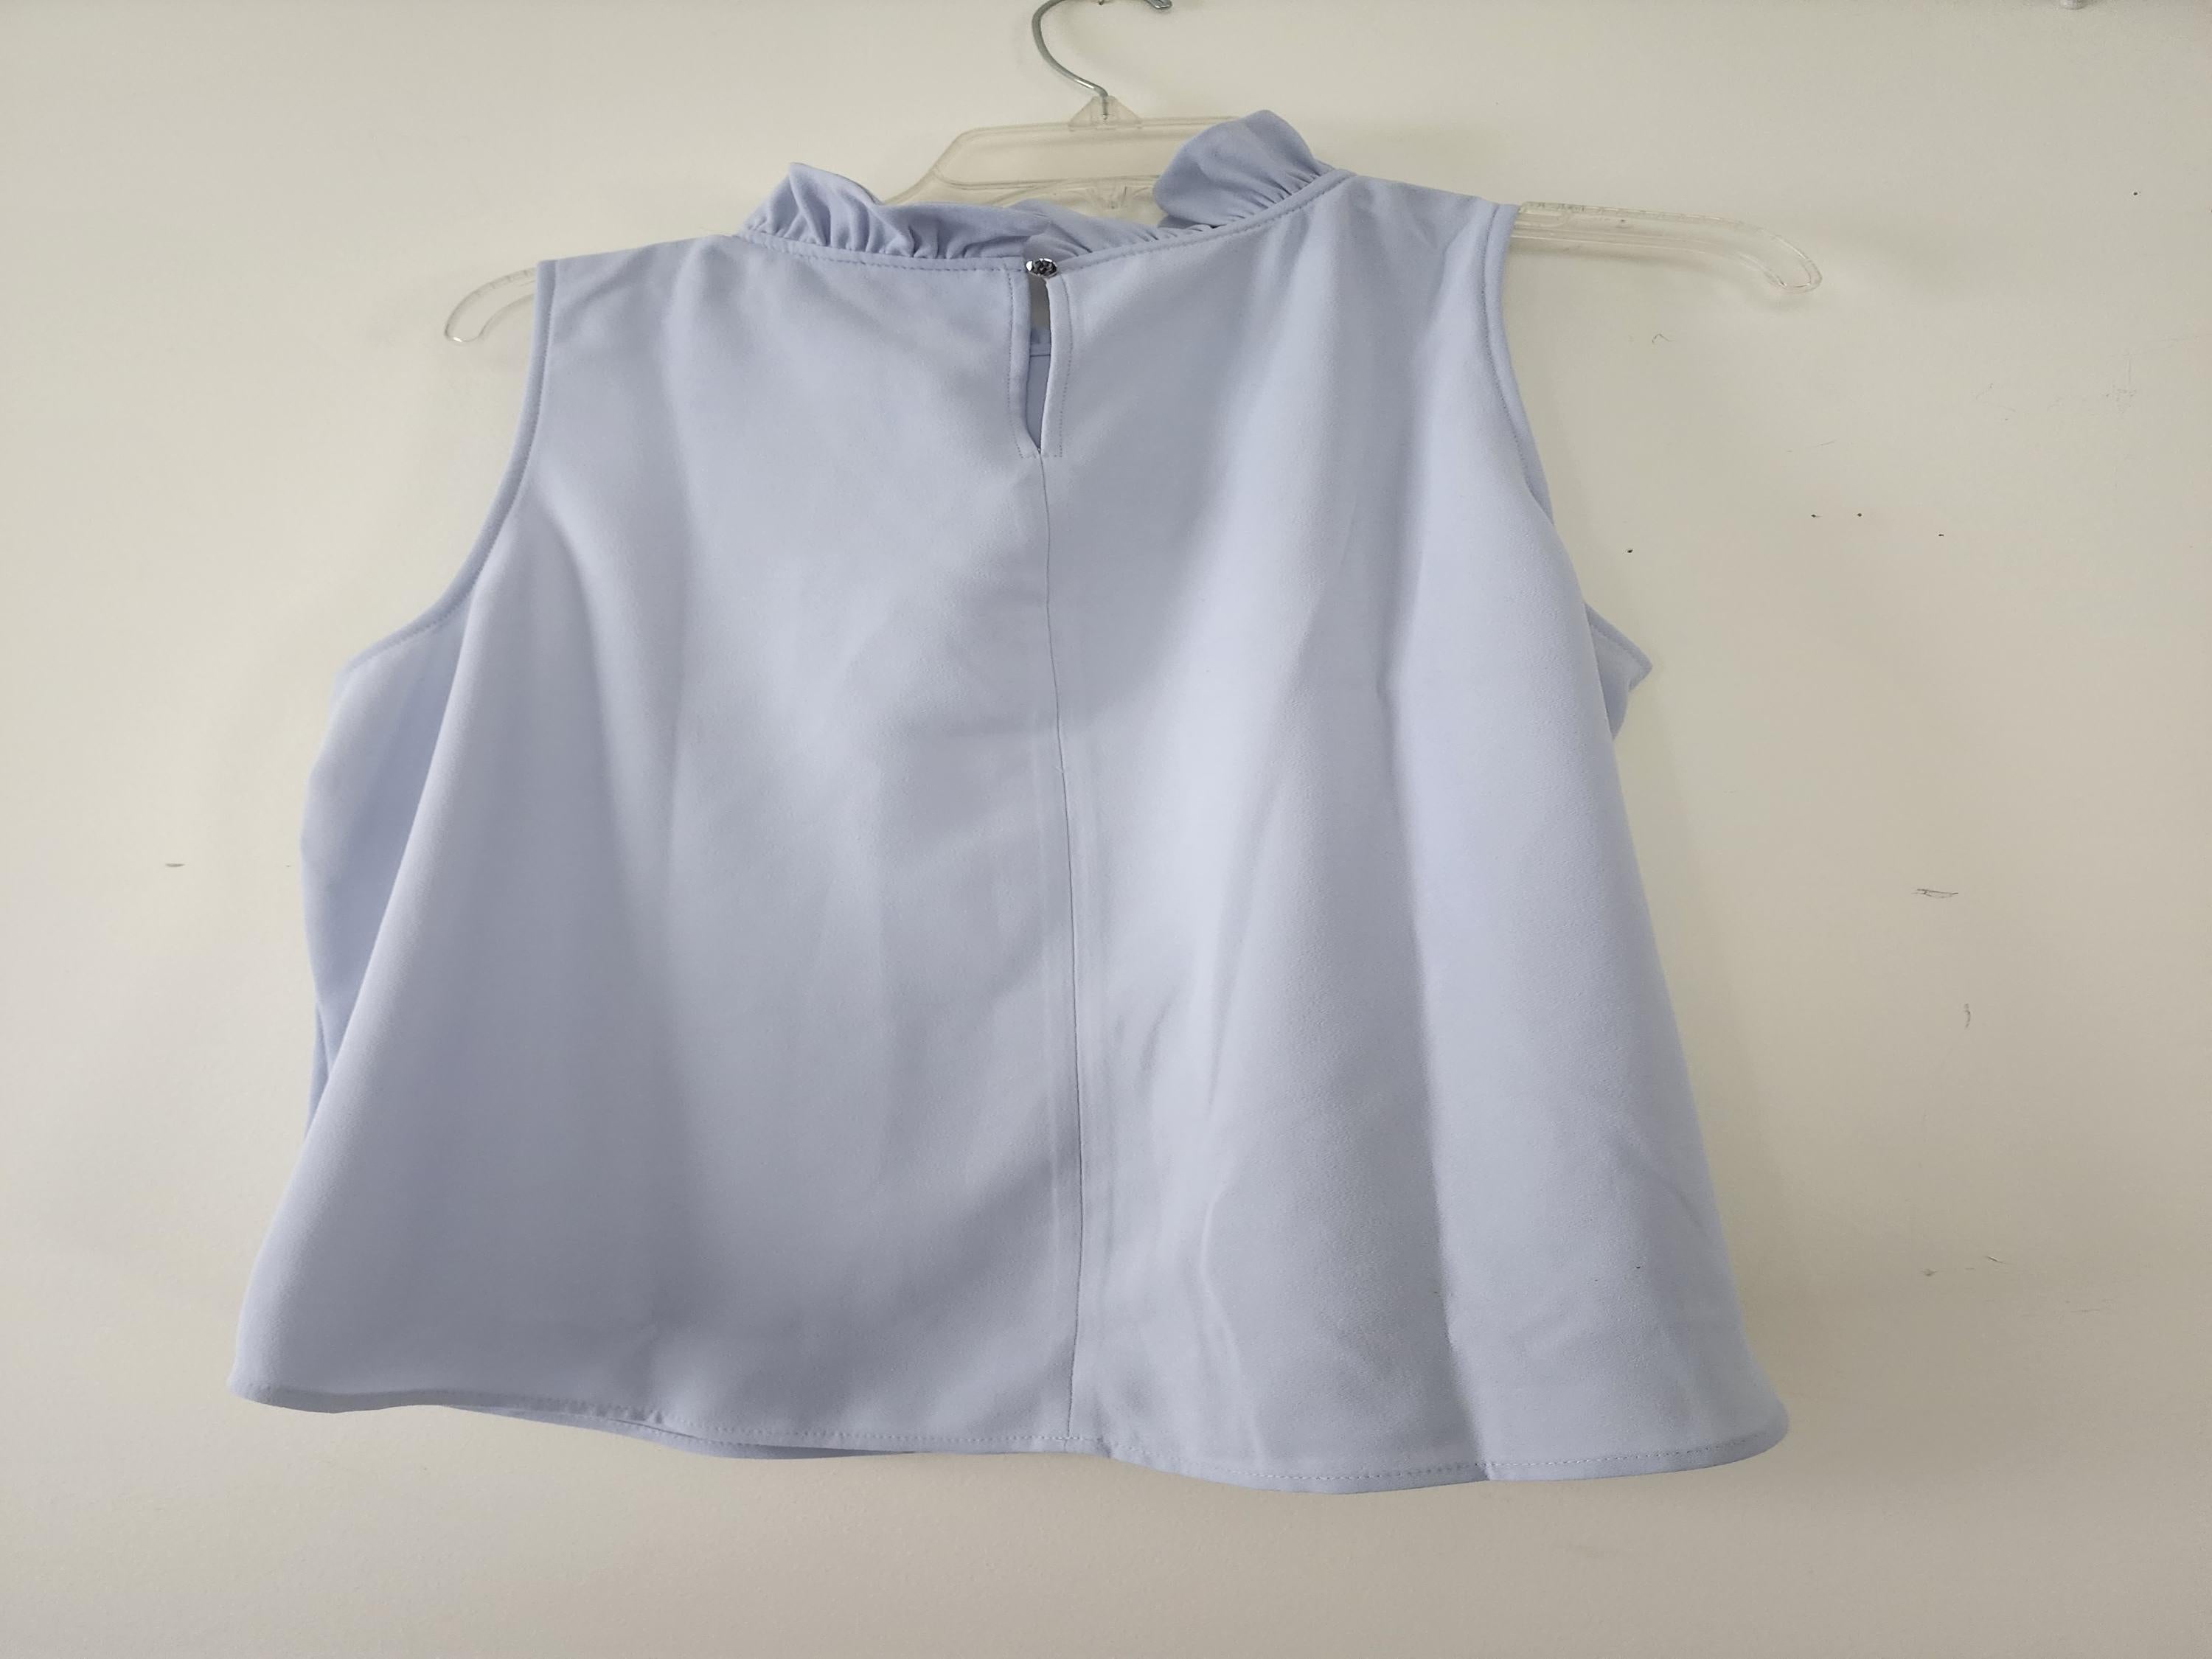 Powder blue ruffle collar sleeveless shirt sz 16